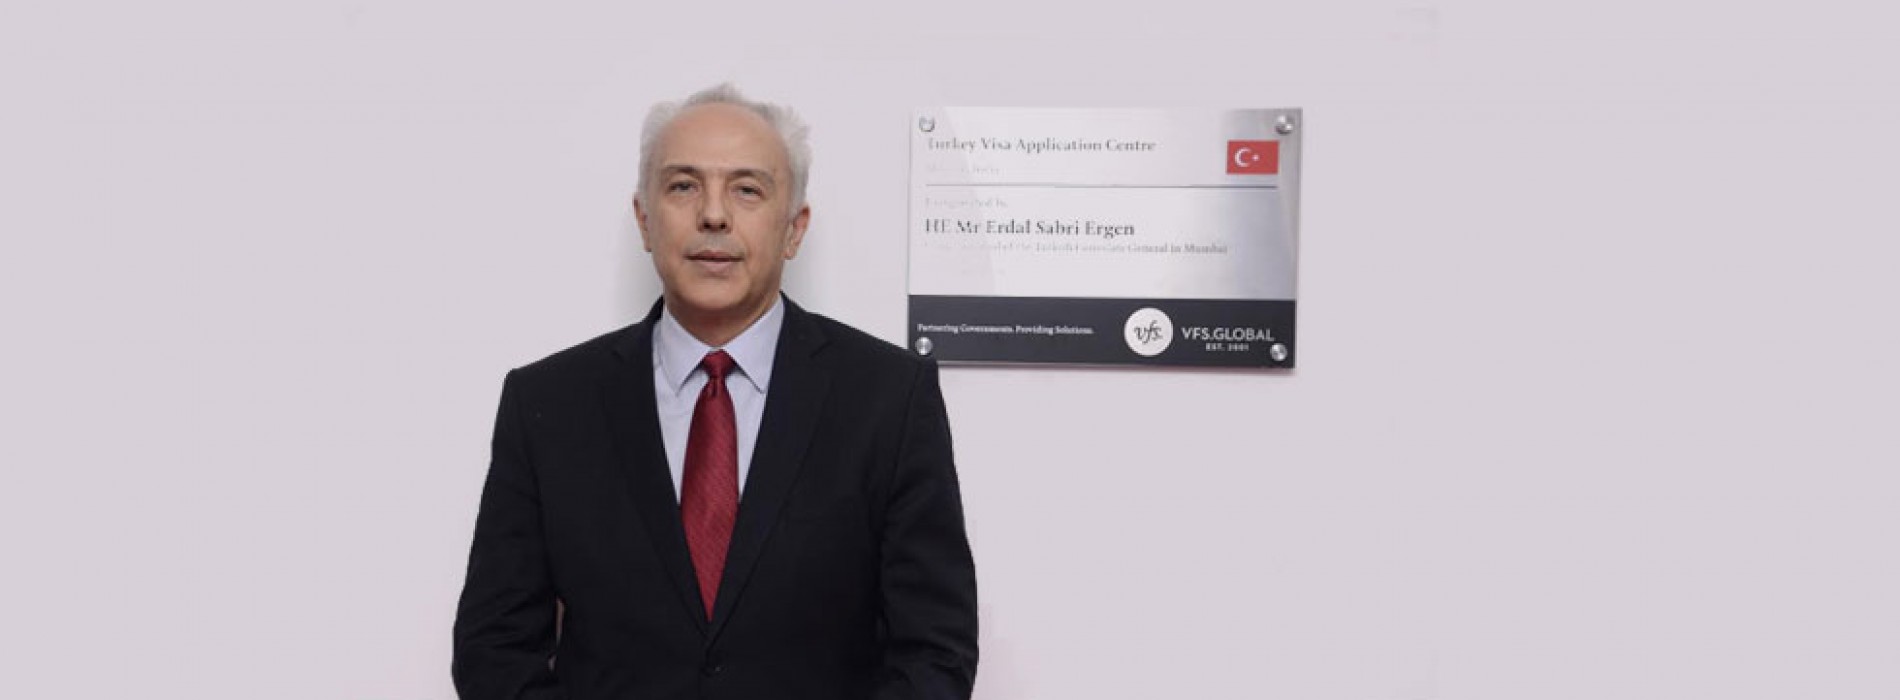 Turkey Visa Application Centre inaugurated in Mumbai, India